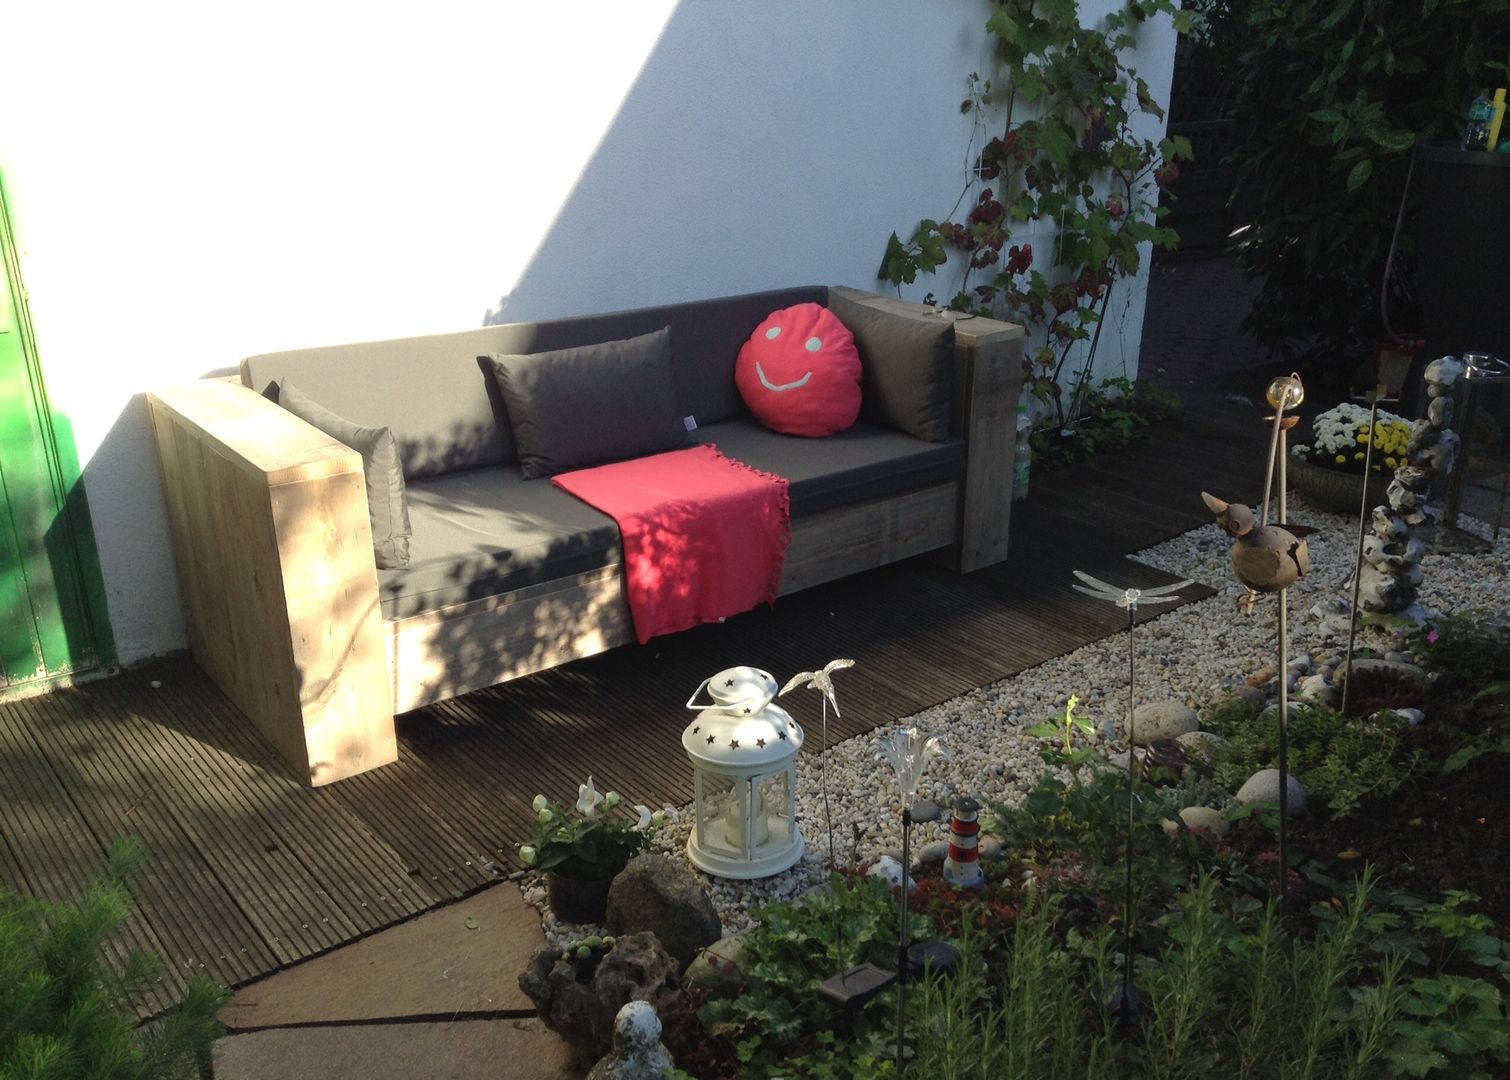 Bauholz Lounge Sofa Stuttgart, Exklusiv Dutch Design Exklusiv Dutch Design Rustic style garden Furniture